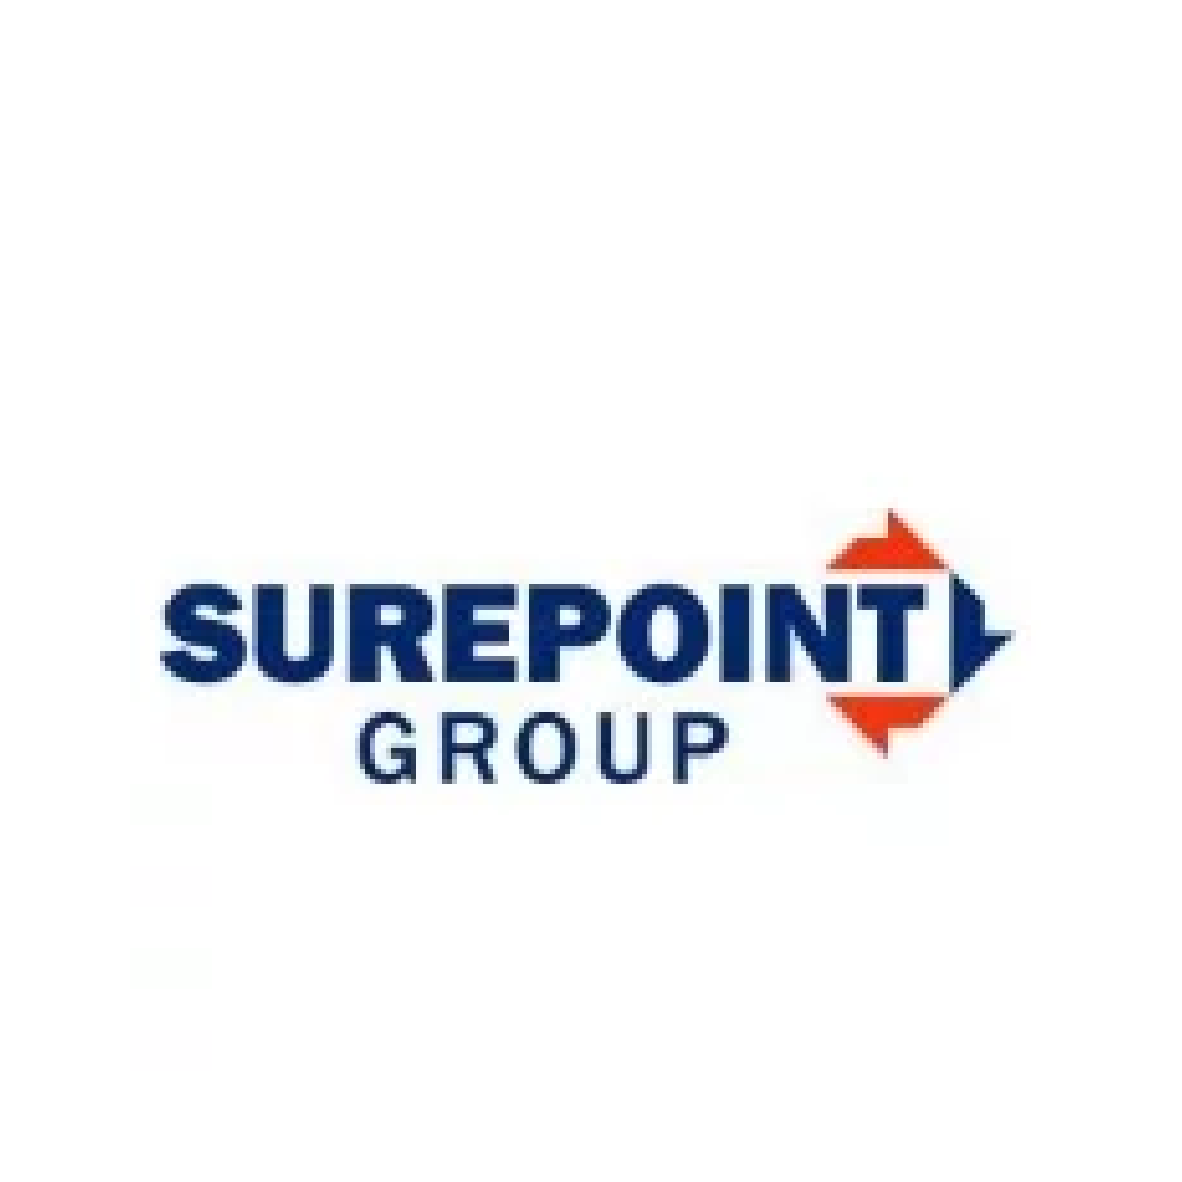  Surepoint Group logo 